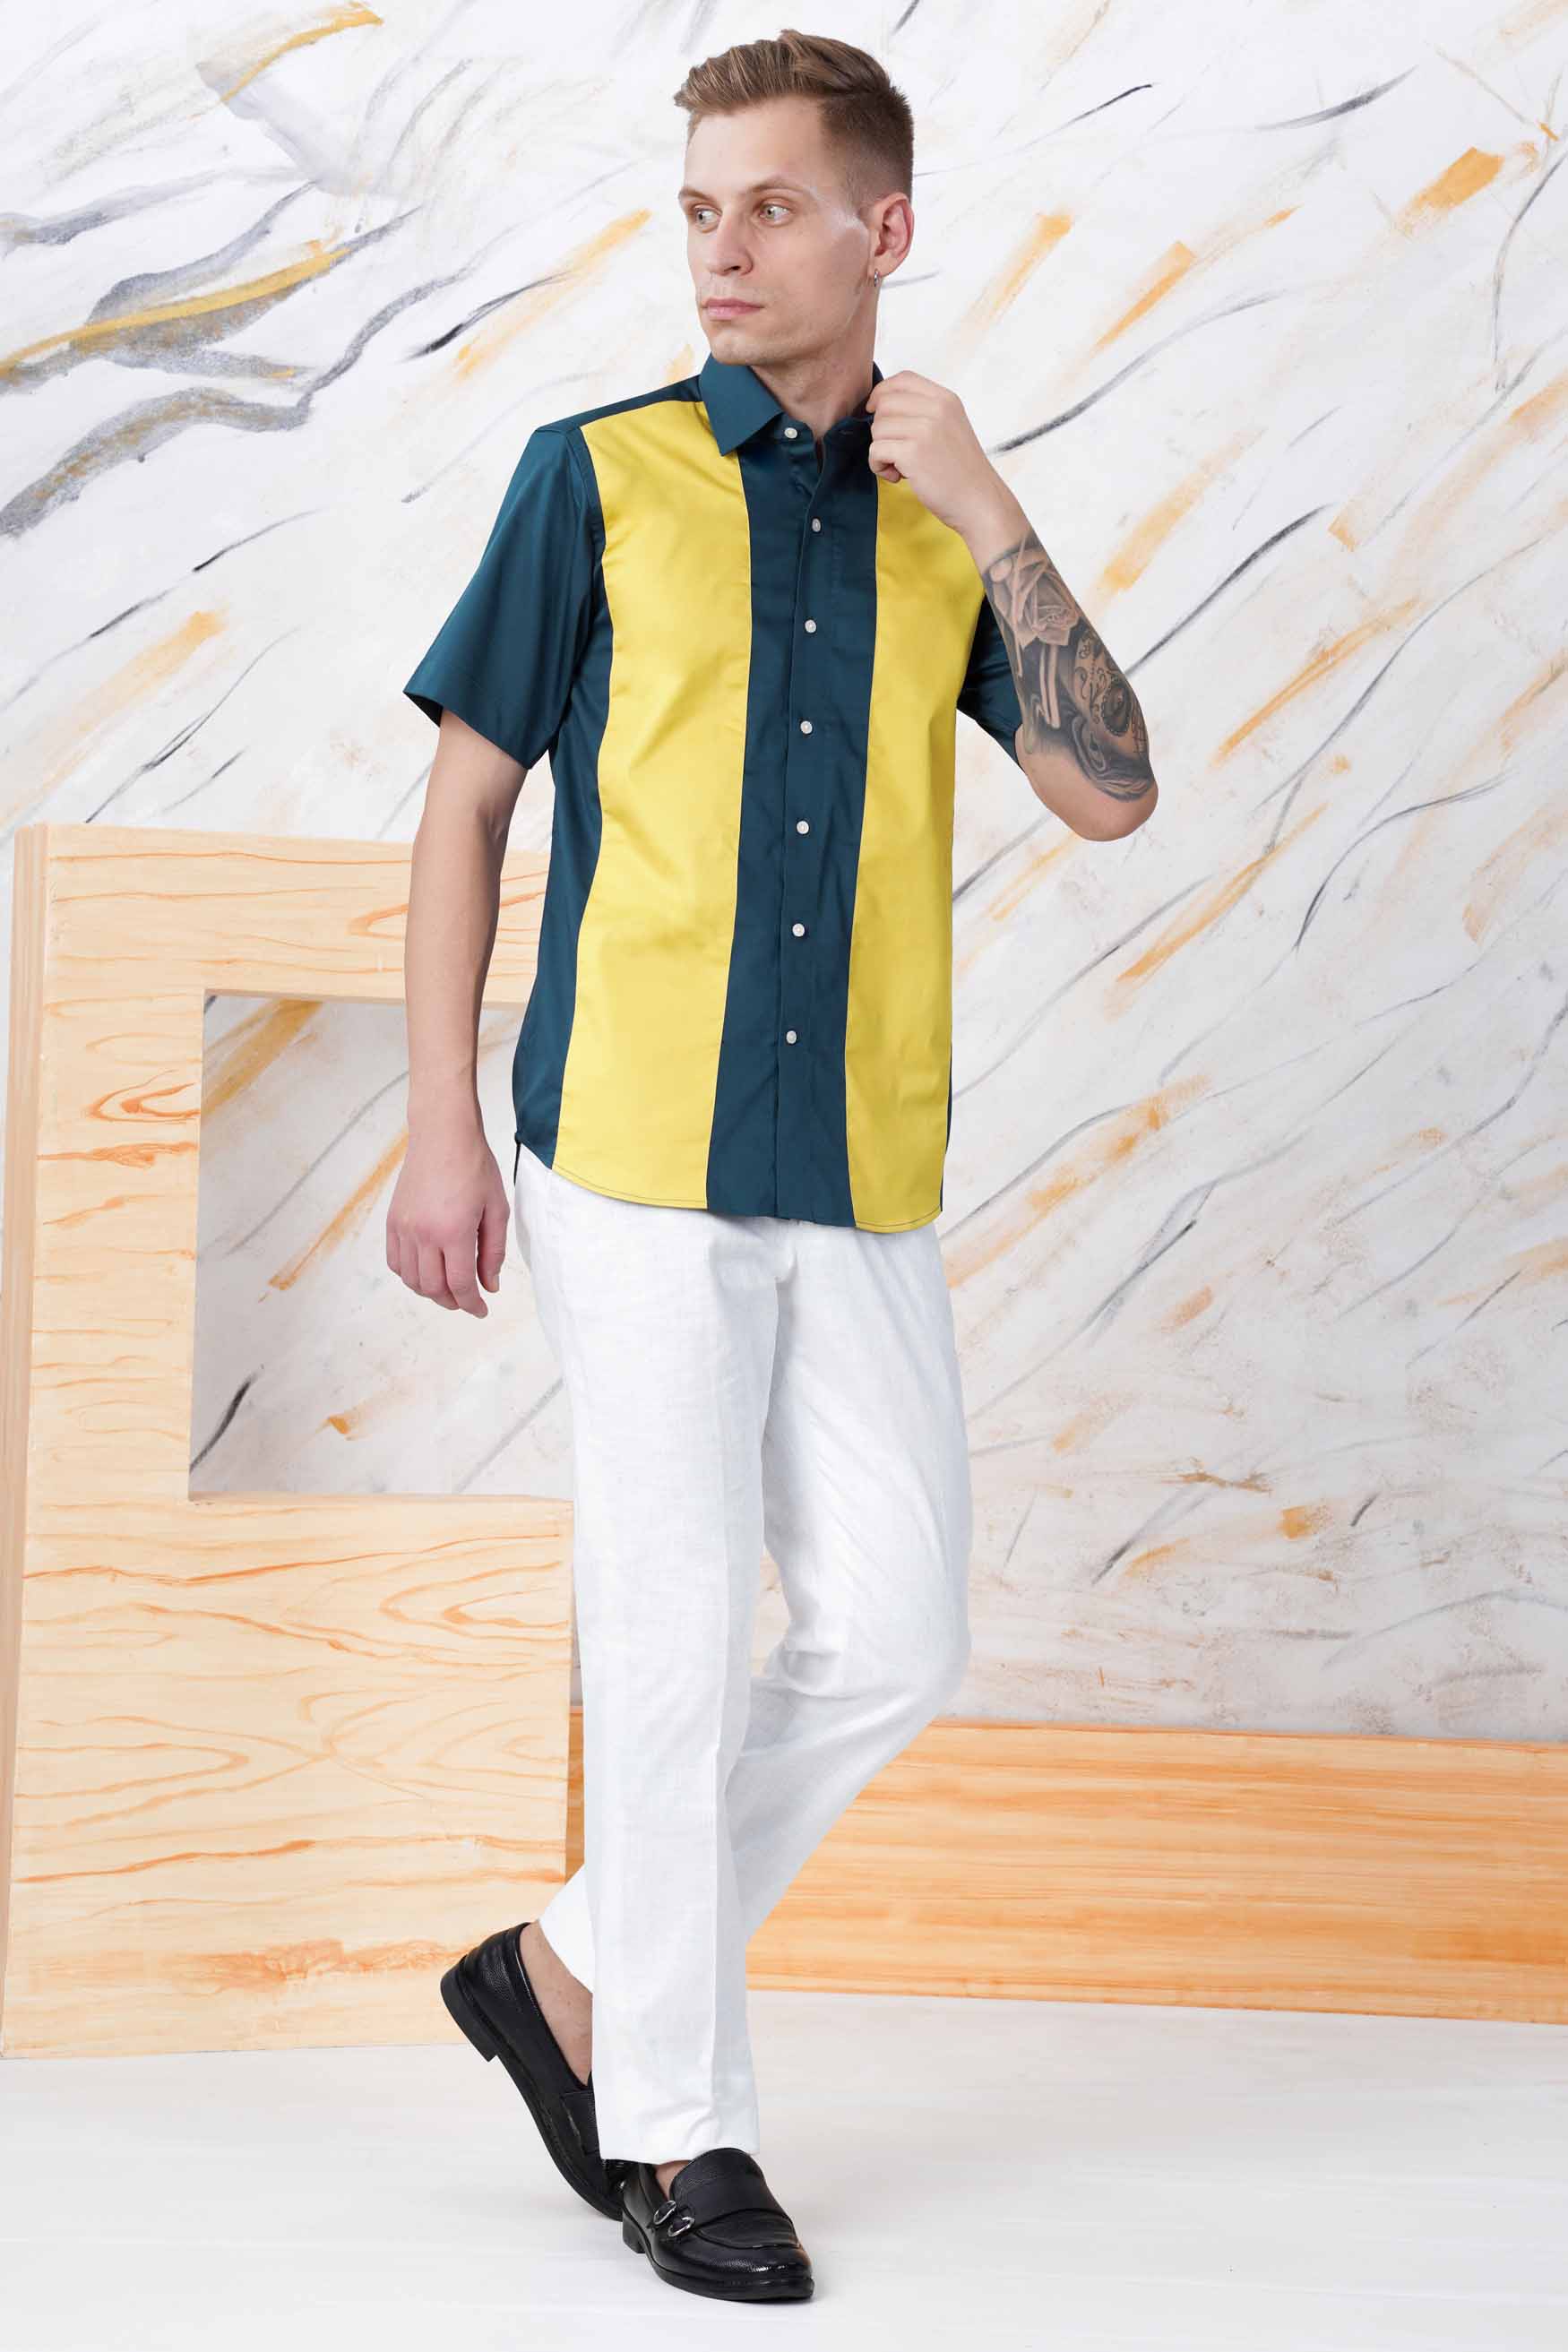 Firefly Blue and Anzac Yellow Subtle Sheen Super Soft Premium Cotton Designer Shirt